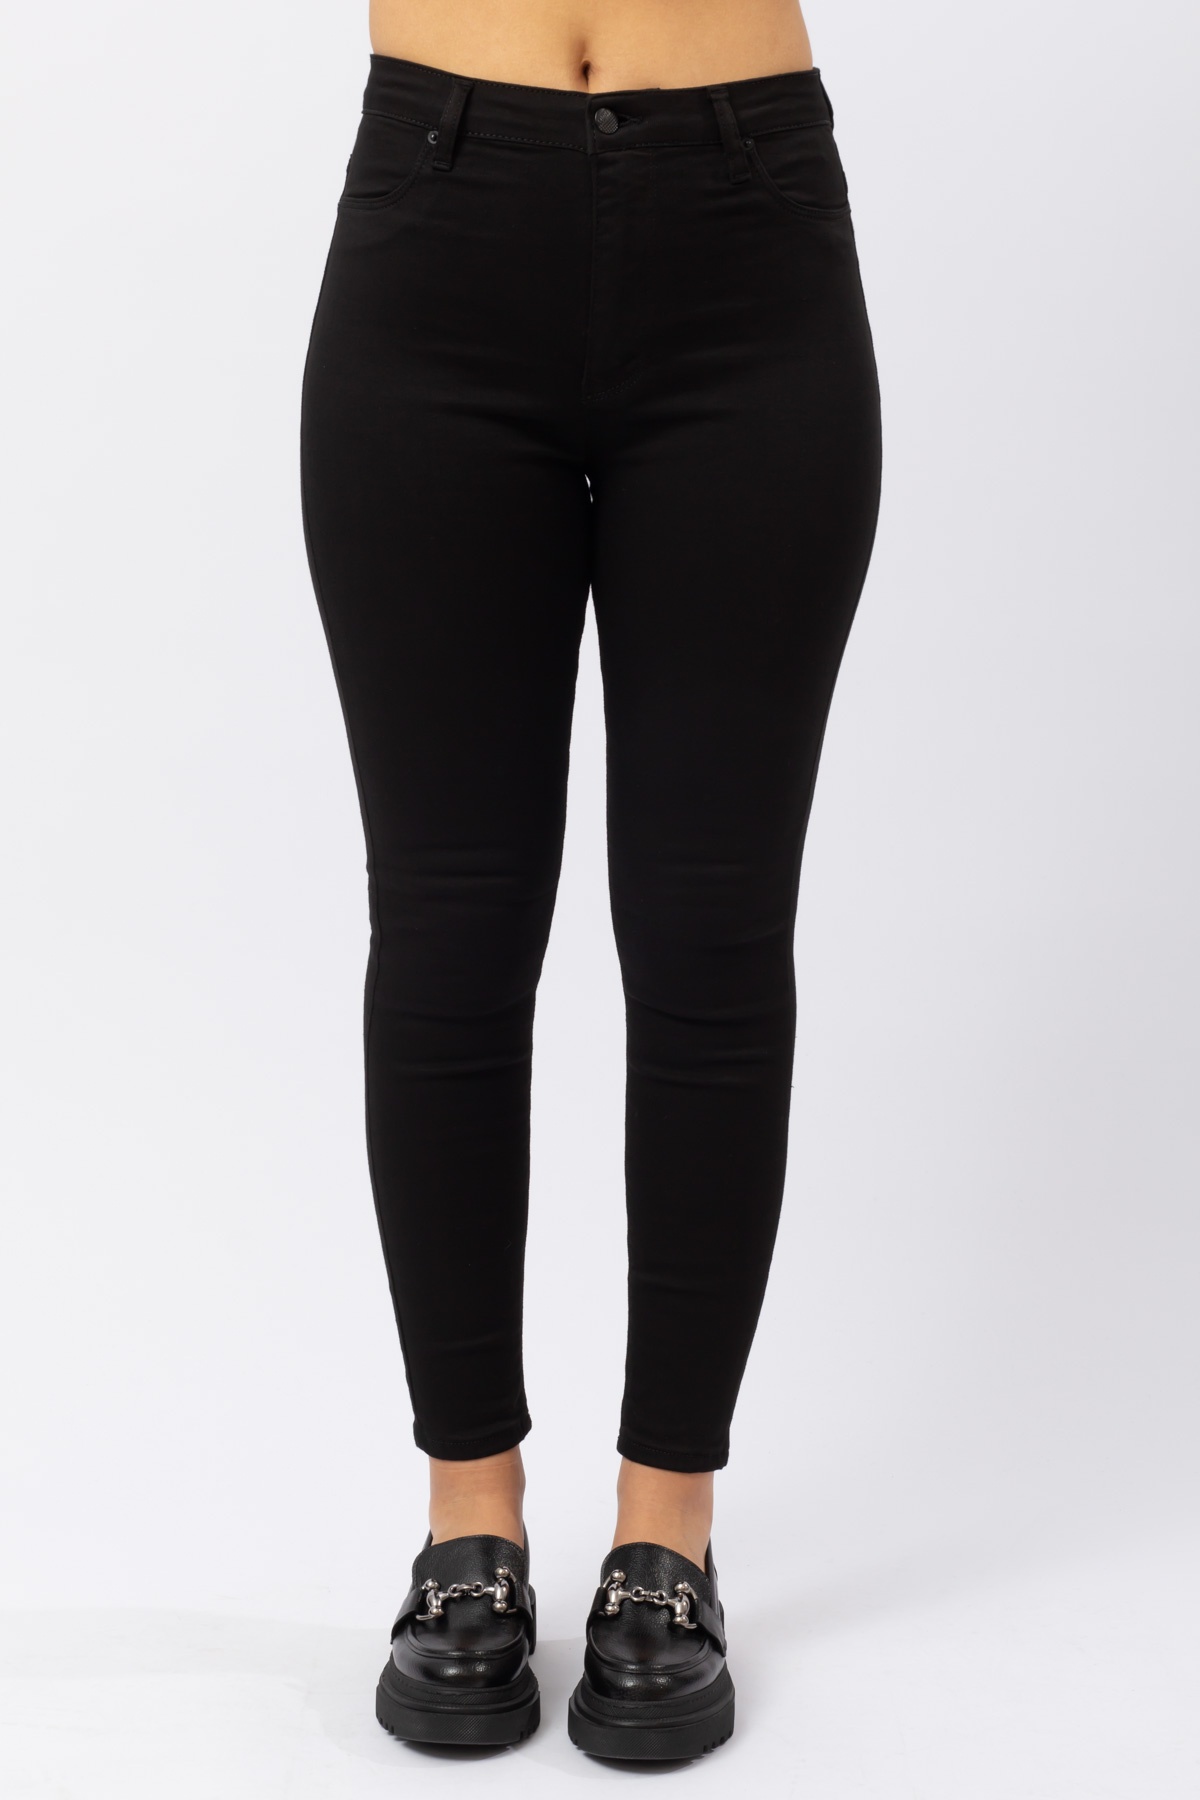 Siyah Renk XS-XL Beden Süper Skinny Yüksel Bel Tayt Pantolon